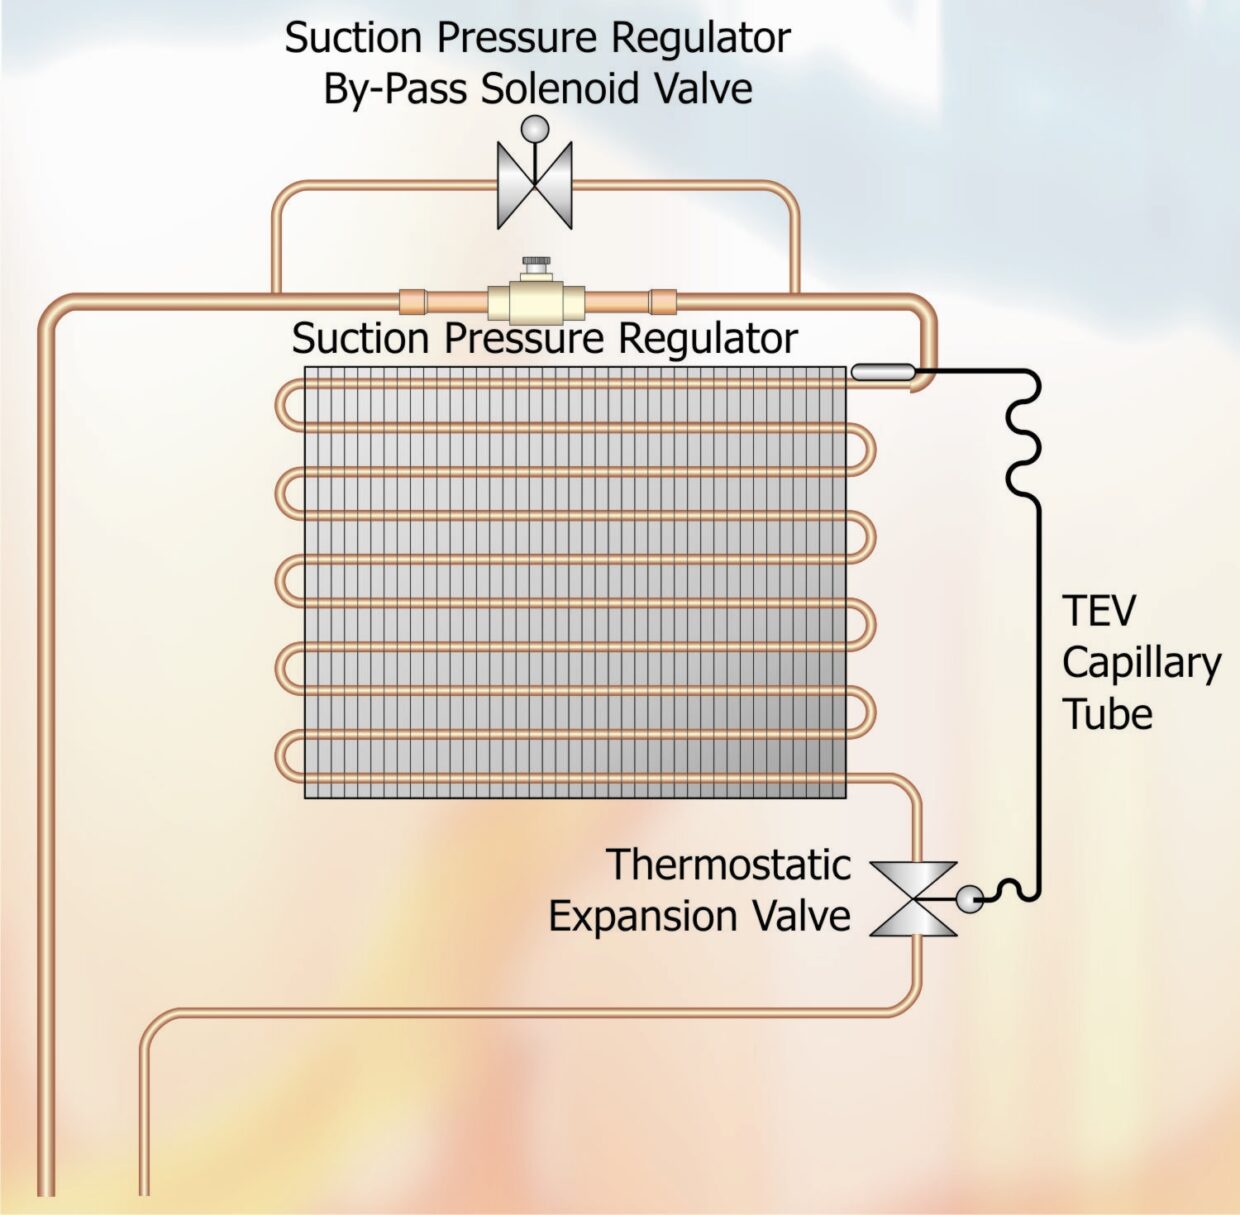 Fig 1 Suction Pressure Regulator